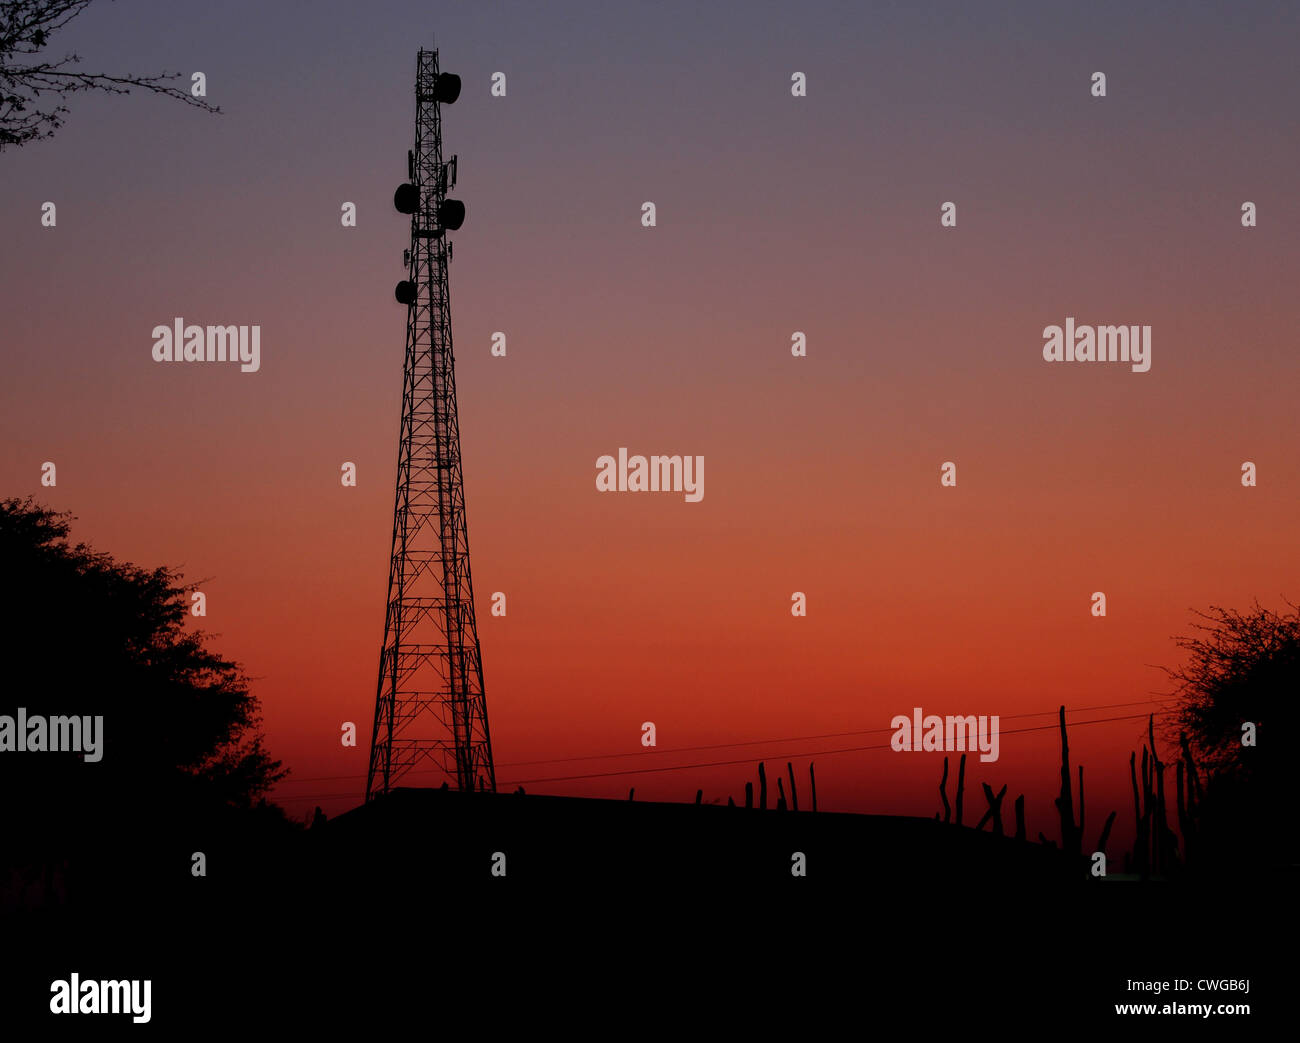 Telecommunications mast at sunset in Zambia, Africa Stock Photo